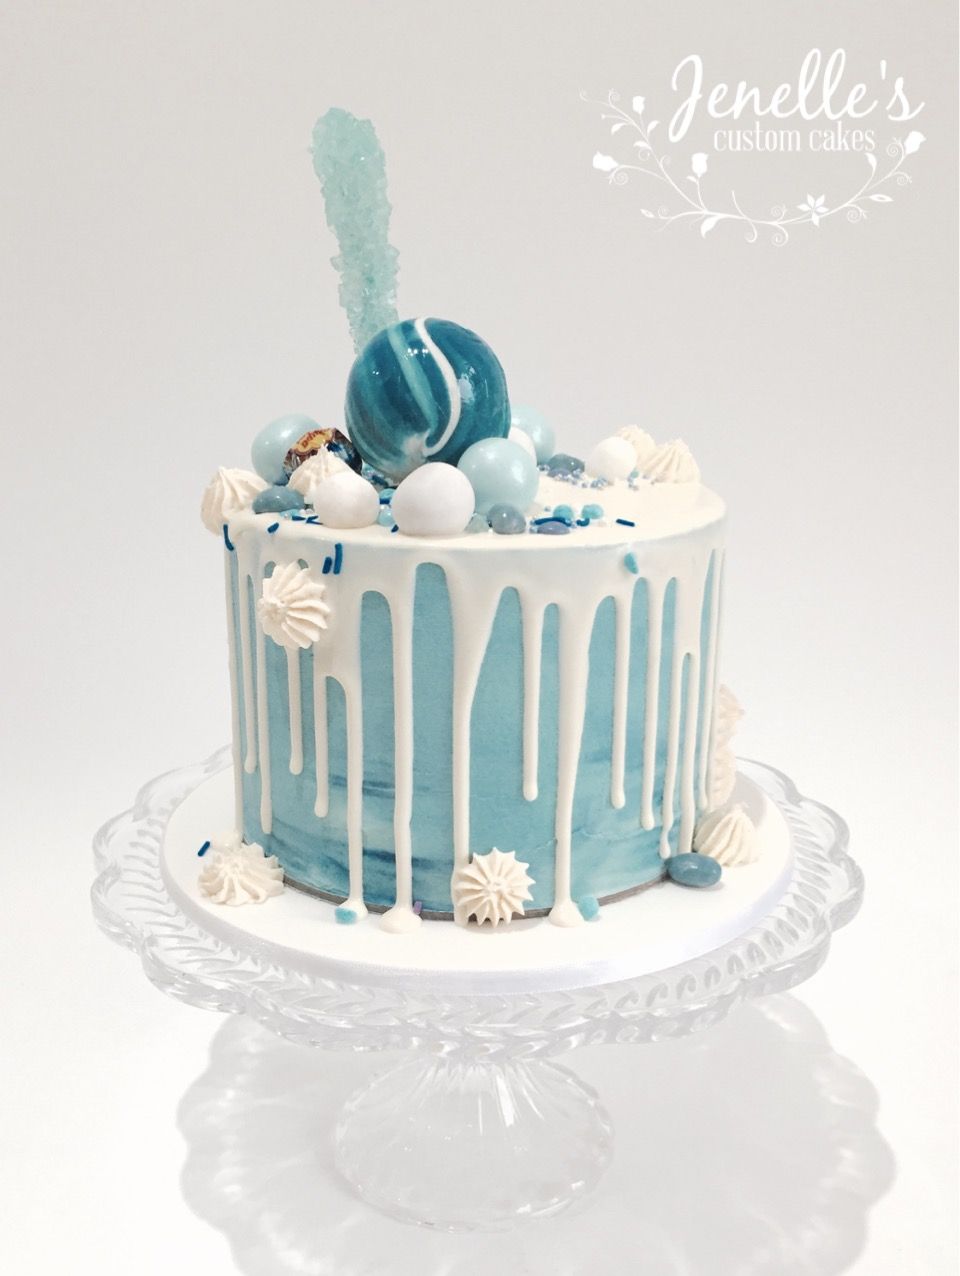 Masculino azul e branco  Cake decorating tips, Hand painted